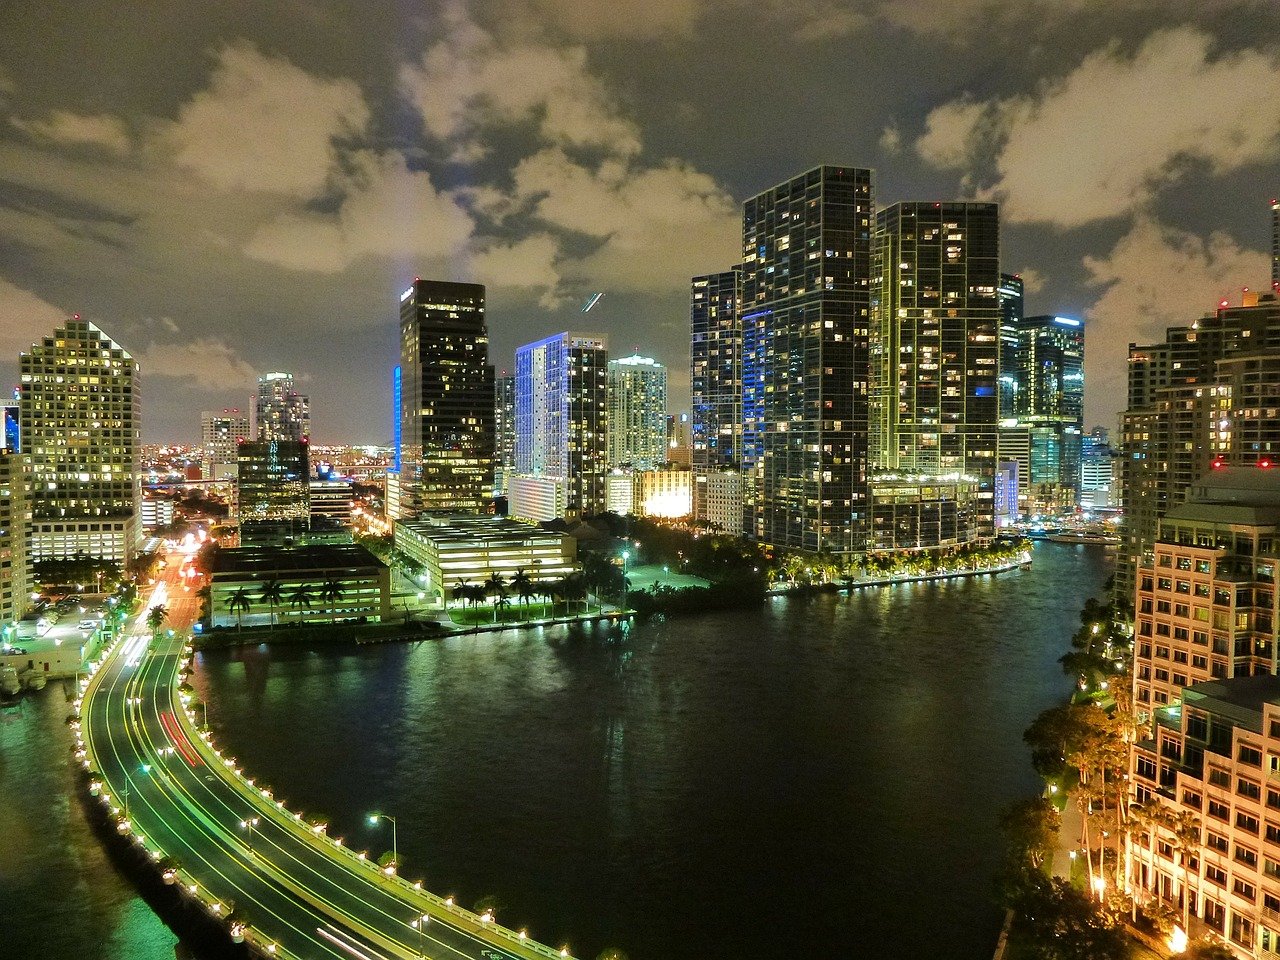 Miami Female Strippers - City Skyline